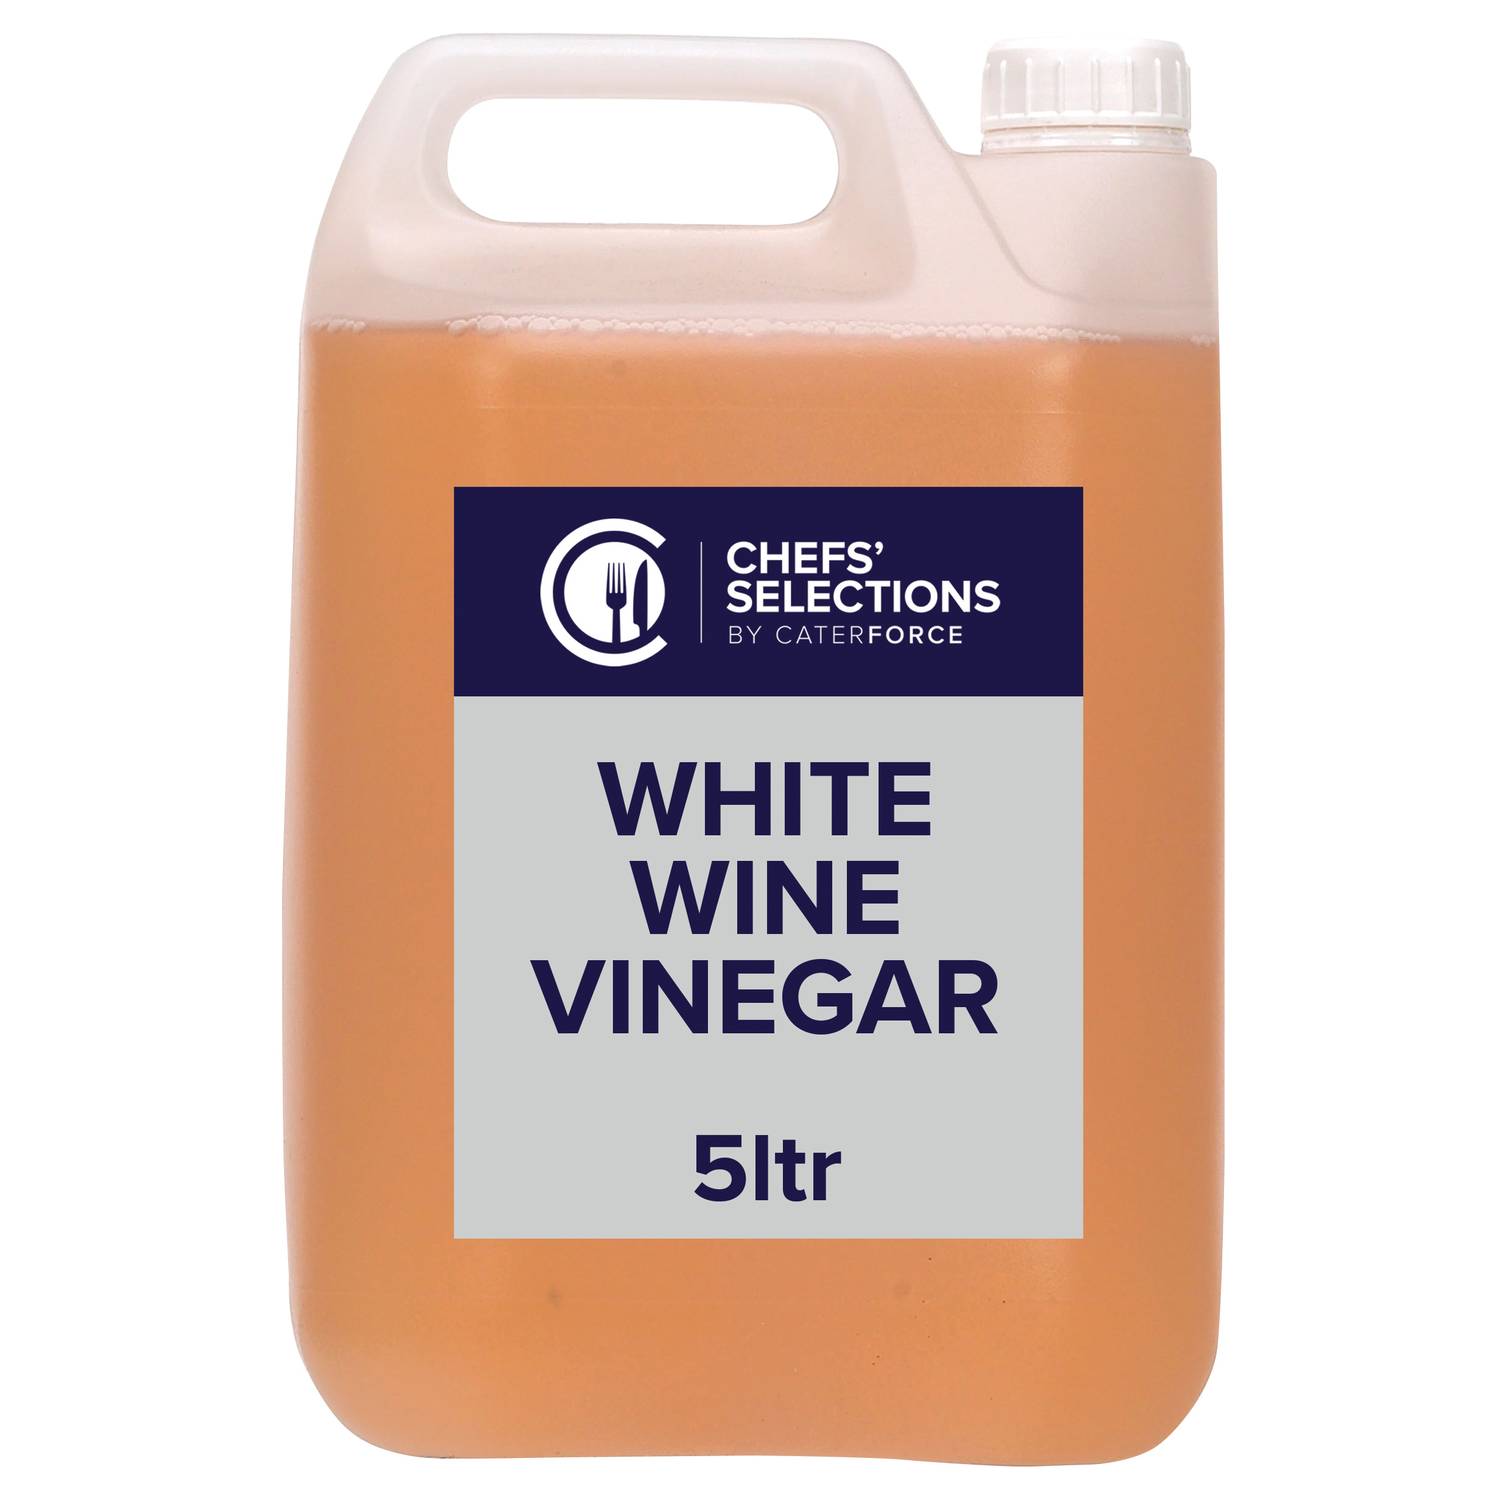 Chefs’ Selections White Wine Vinegar (4 x 5L)